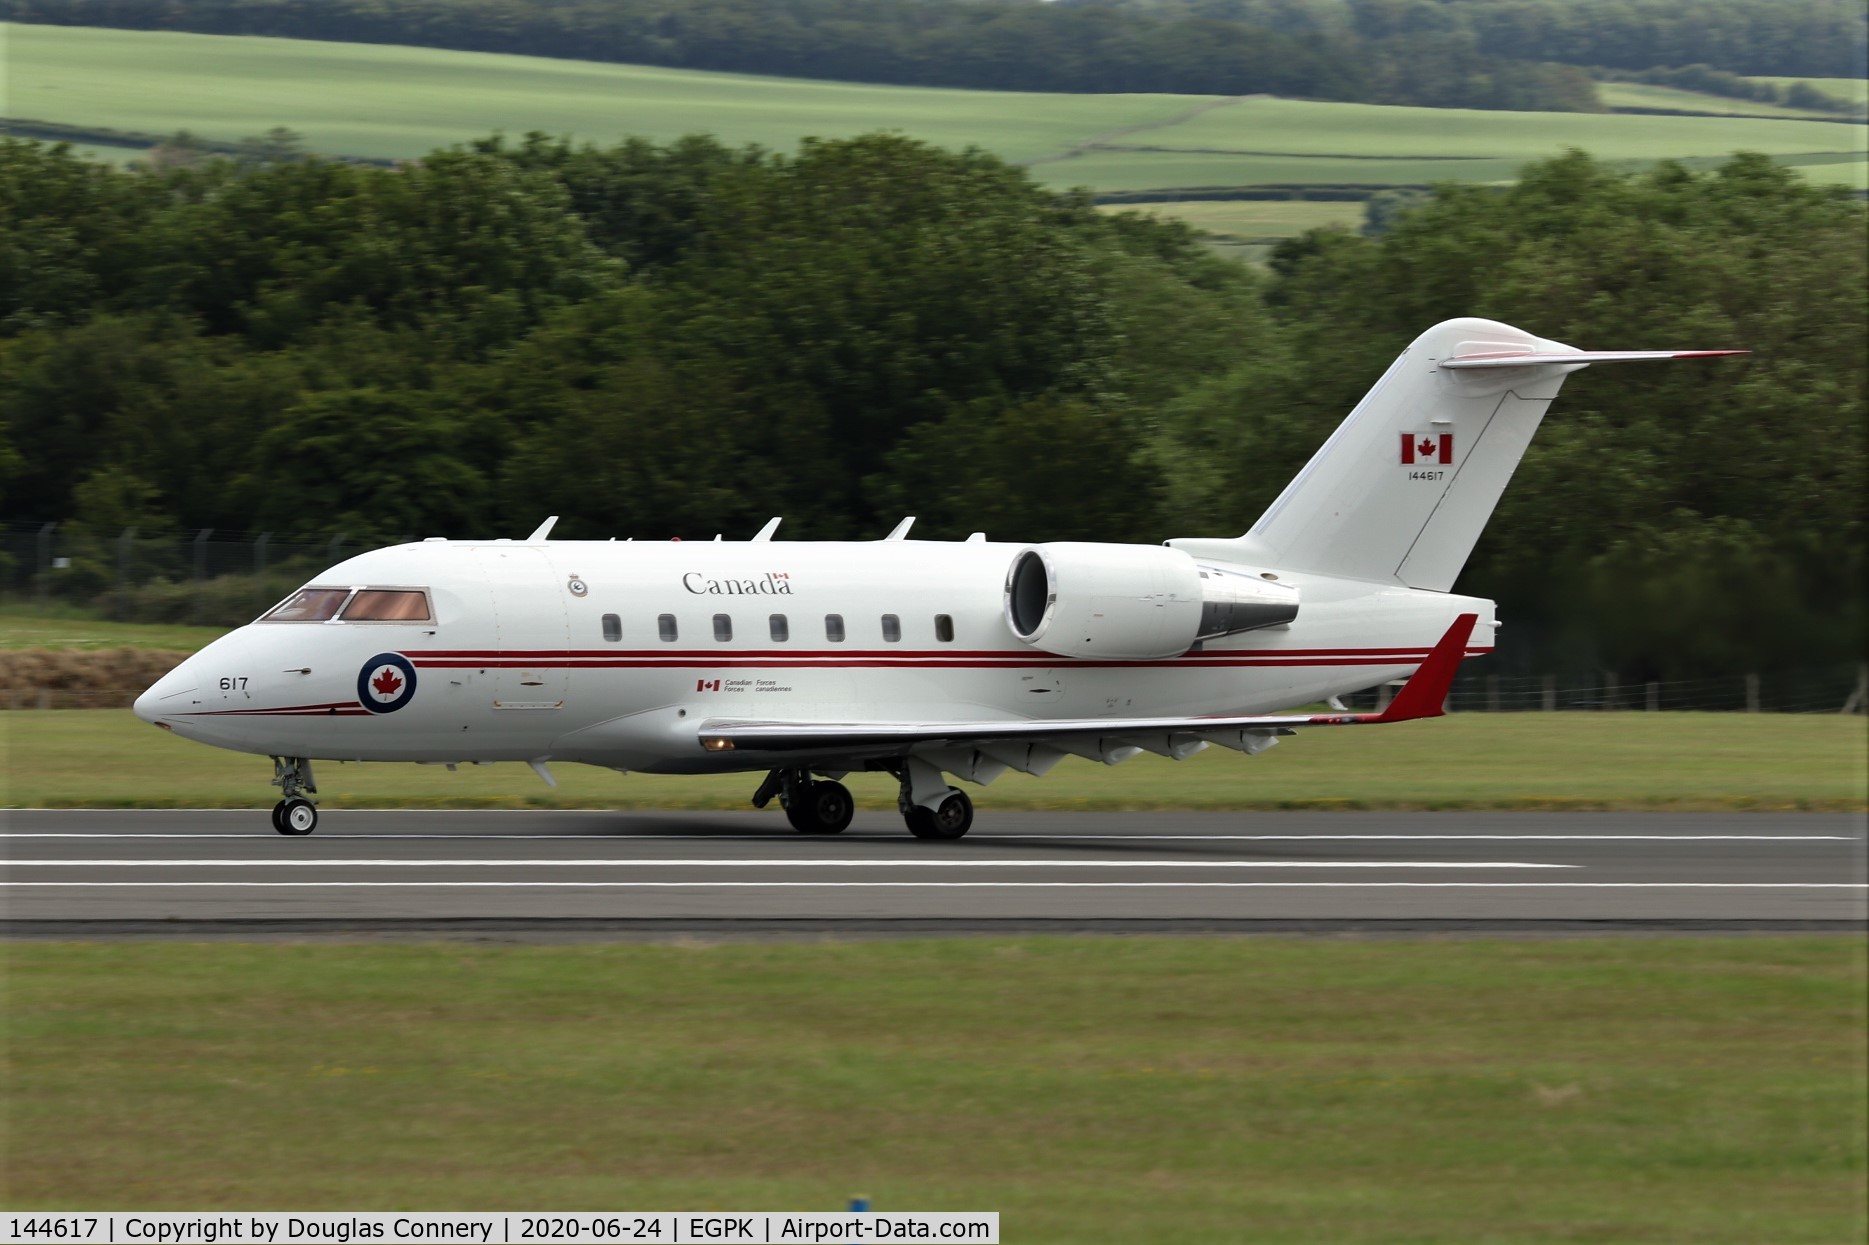 144617, 2002 Bombardier CC-144C Challenger (604/CL-600-2B16) C/N 5533, Departing Prestwick runway 30 in a nice Retro scheme